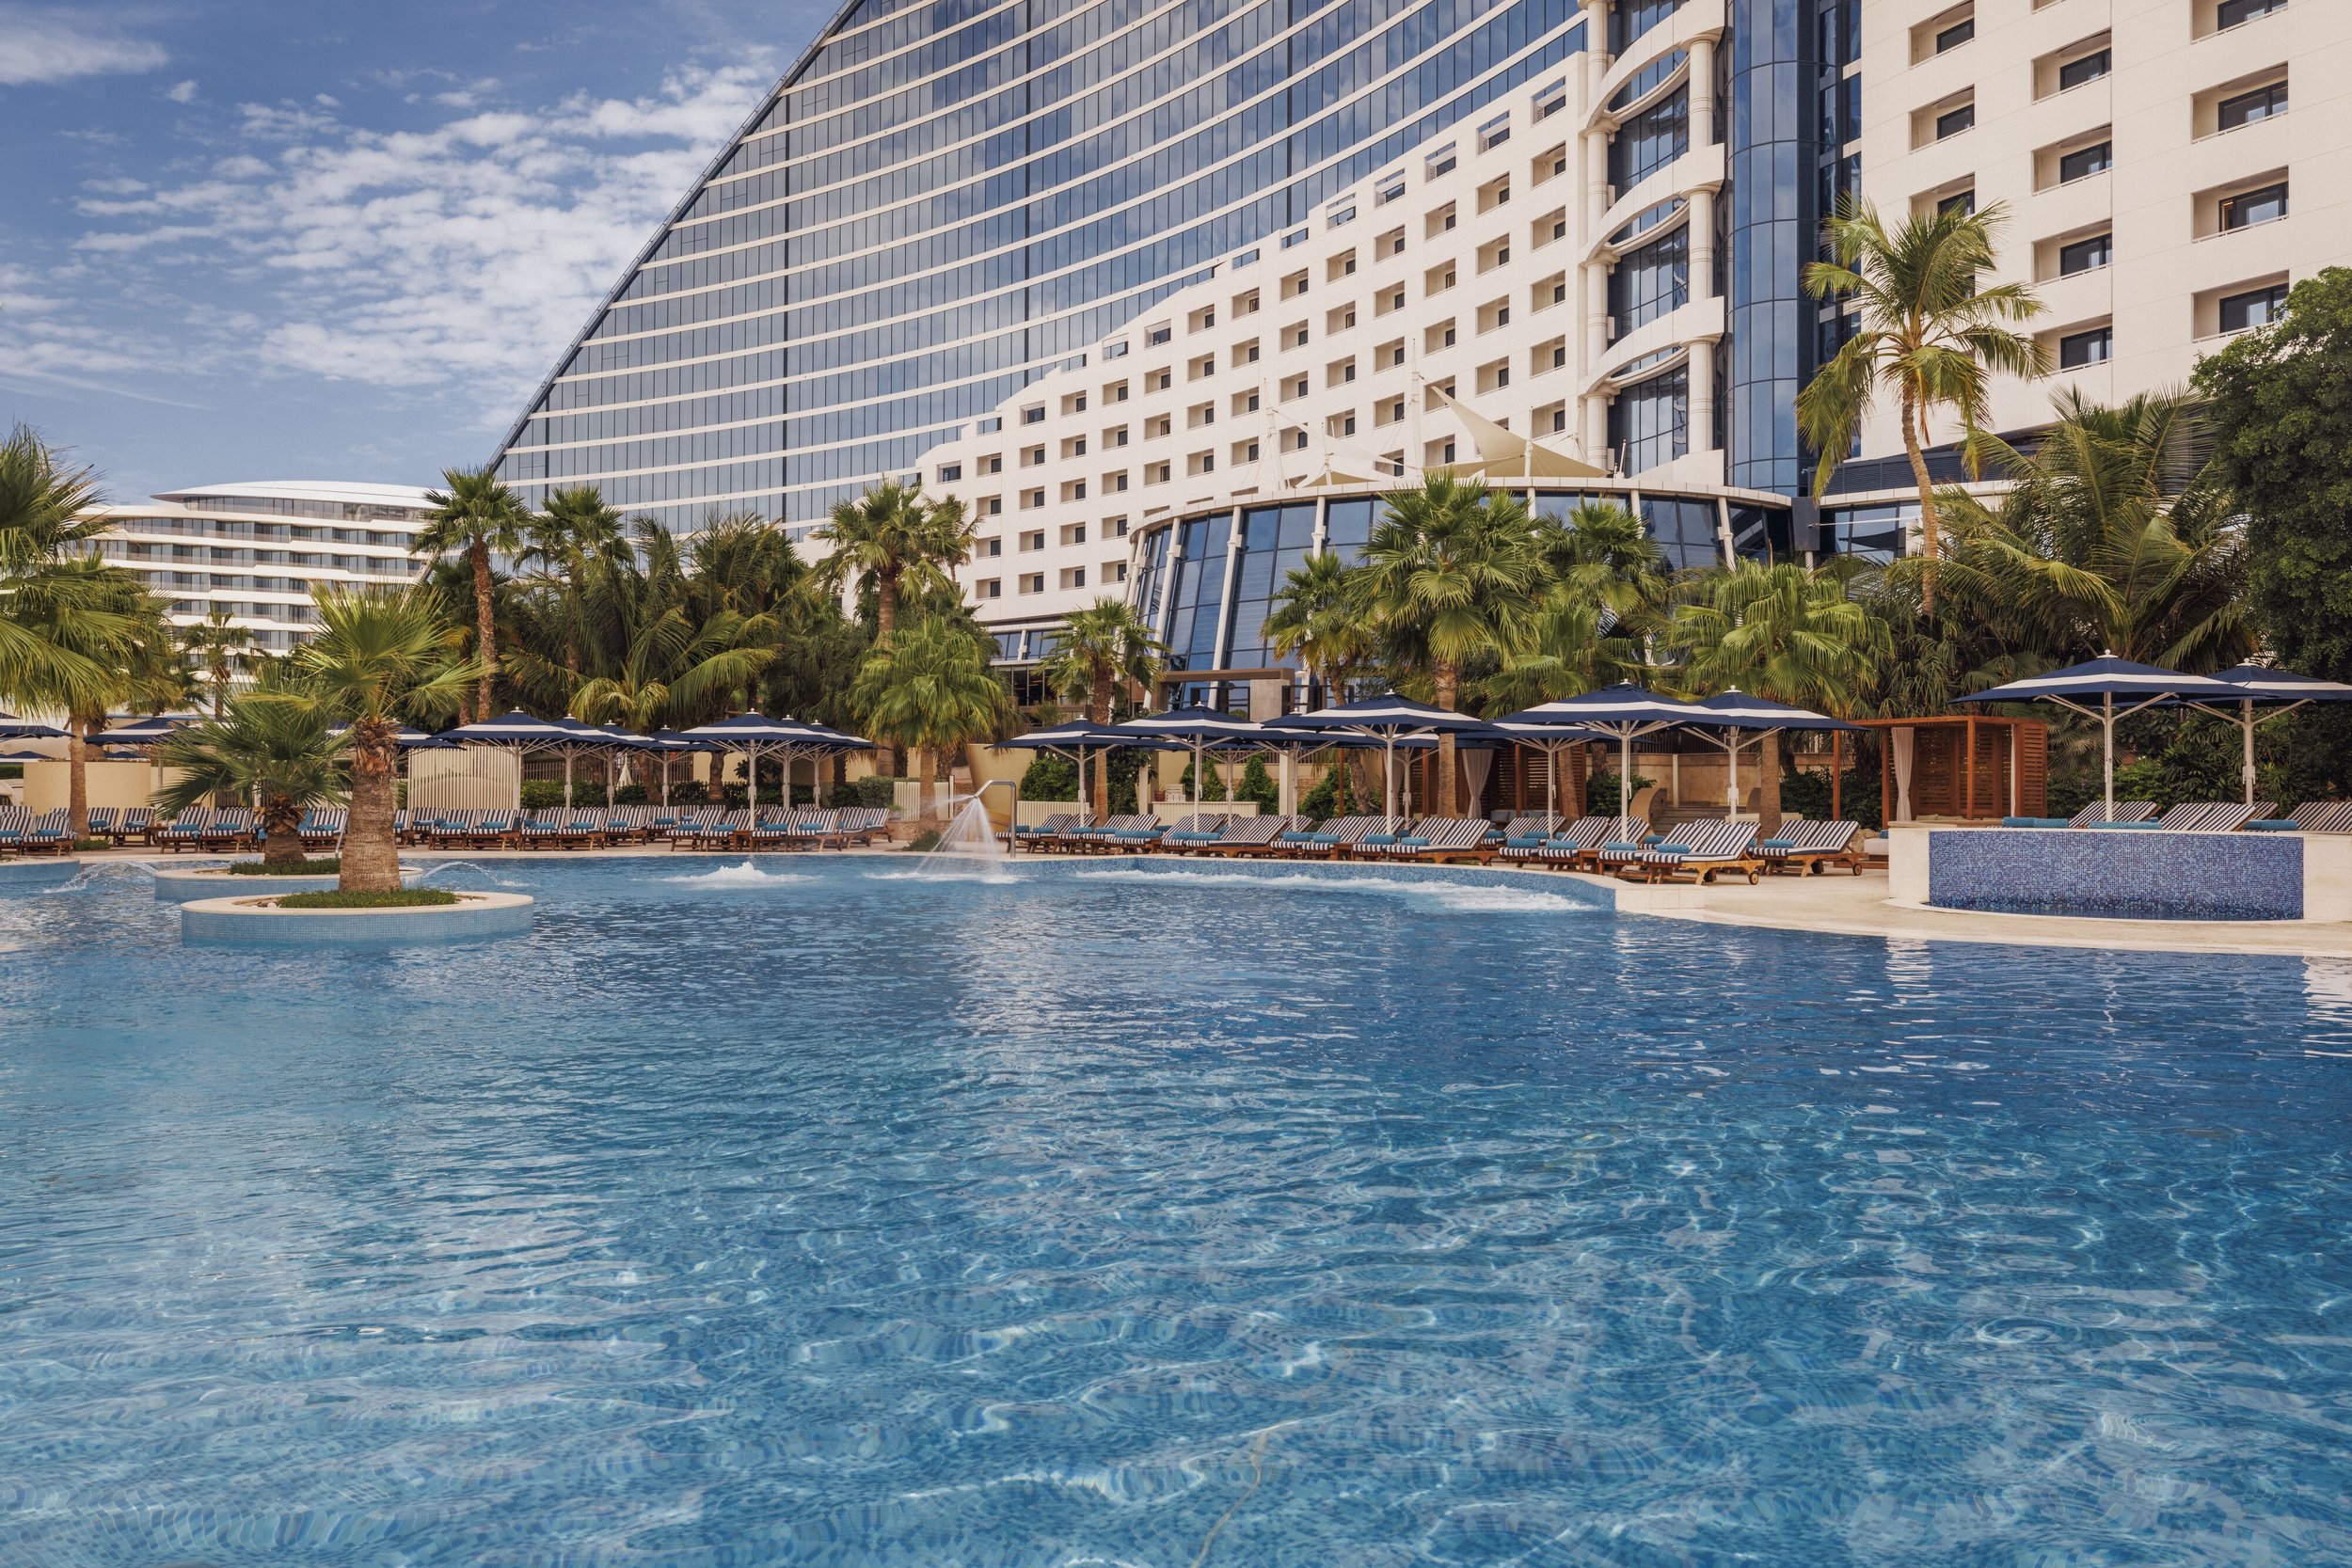 Medium_resolution_150dpi-Jumeirah Beach Hotel - Facilities - Leisure Pool.jpg